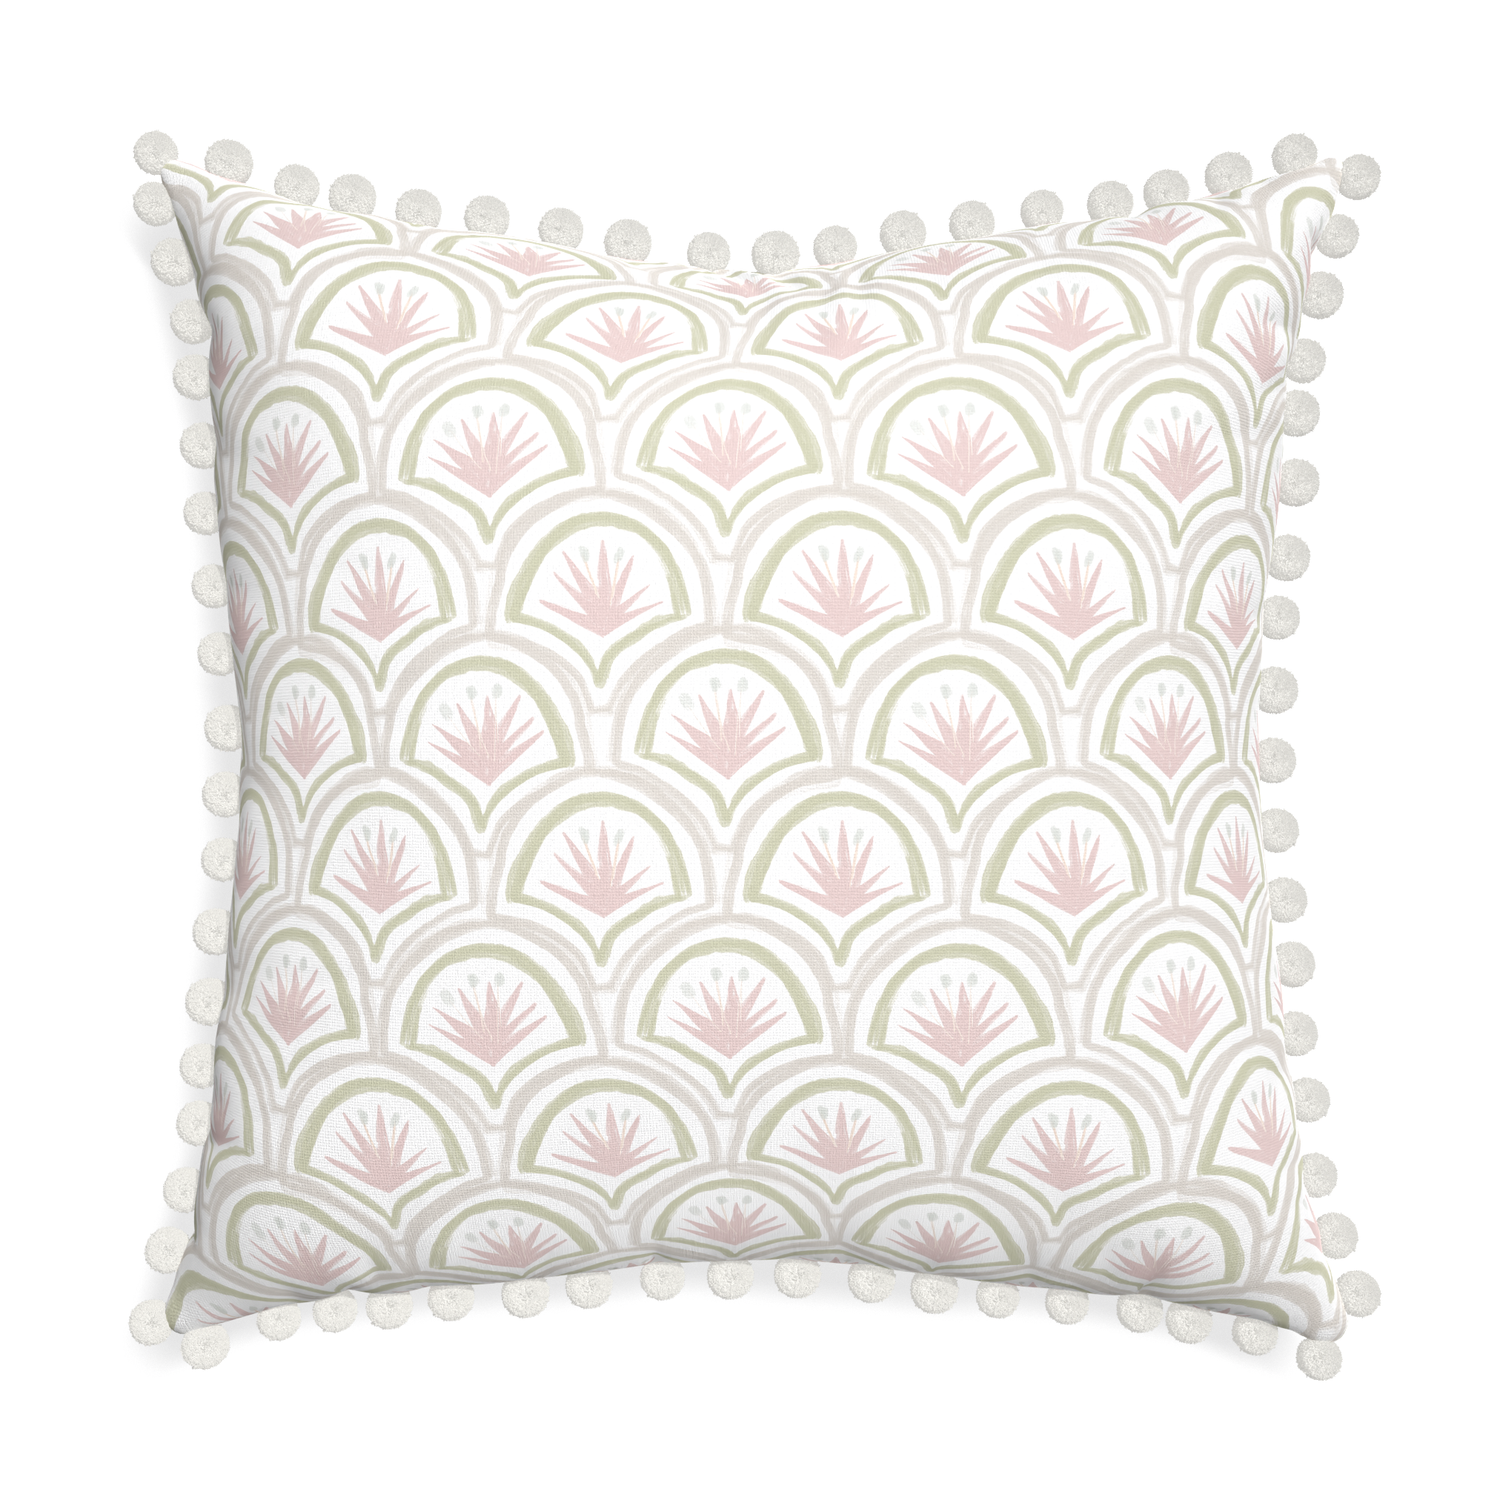 Euro-sham thatcher rose custom pillow with snow pom pom on white background